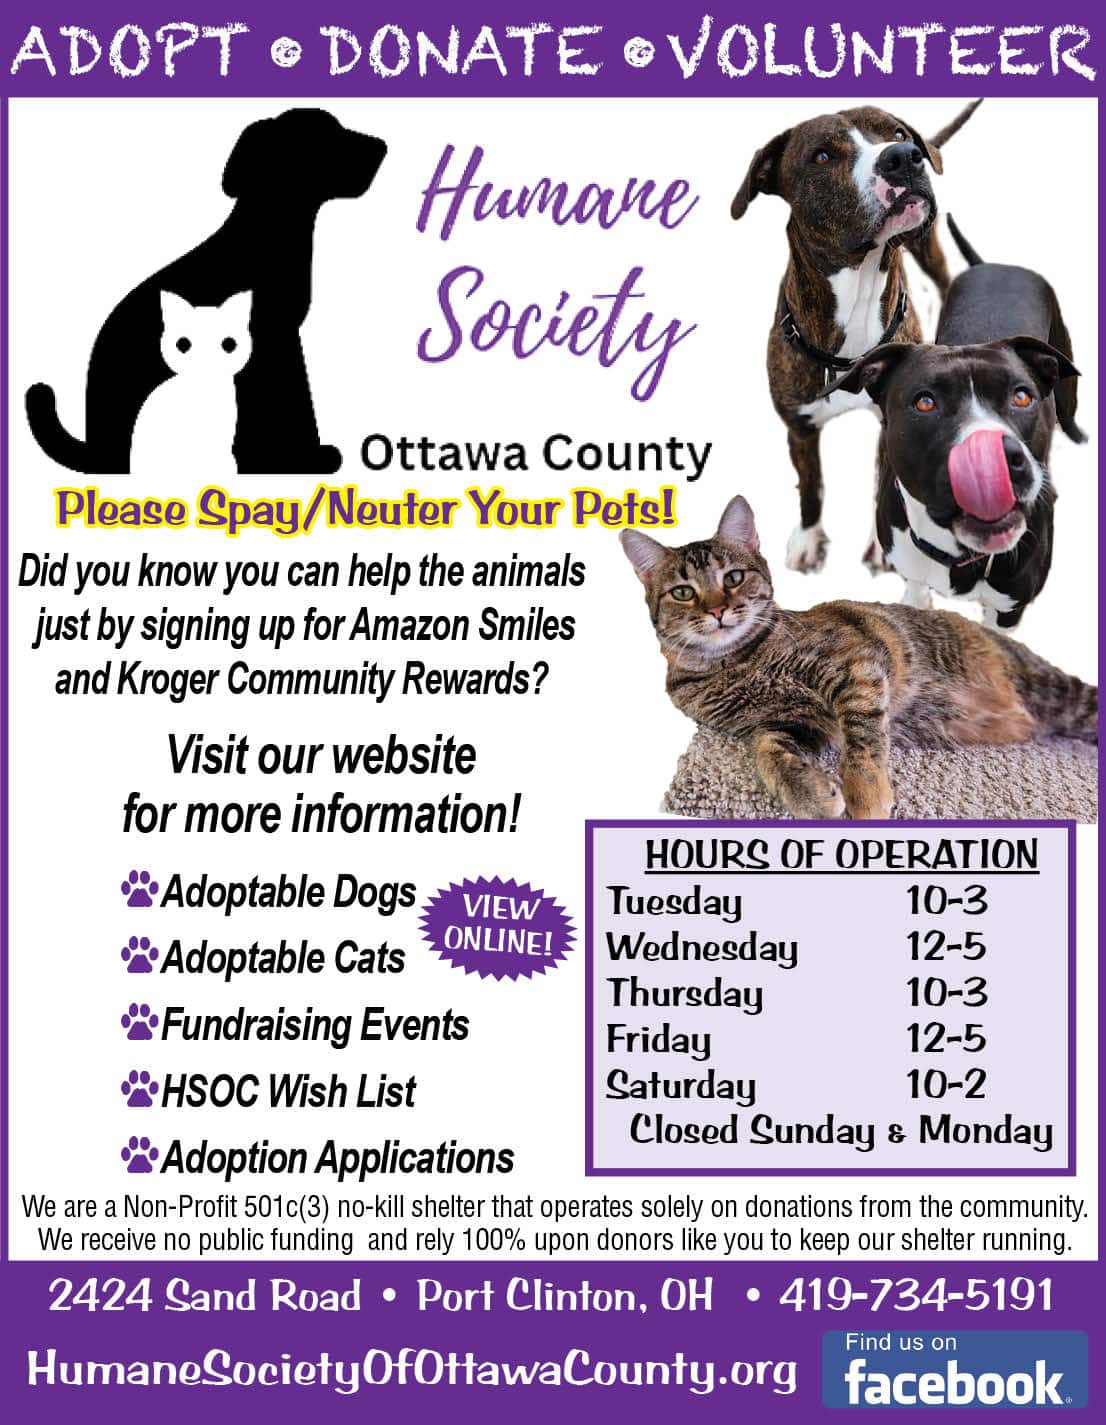 The Humane Society of Ottawa County